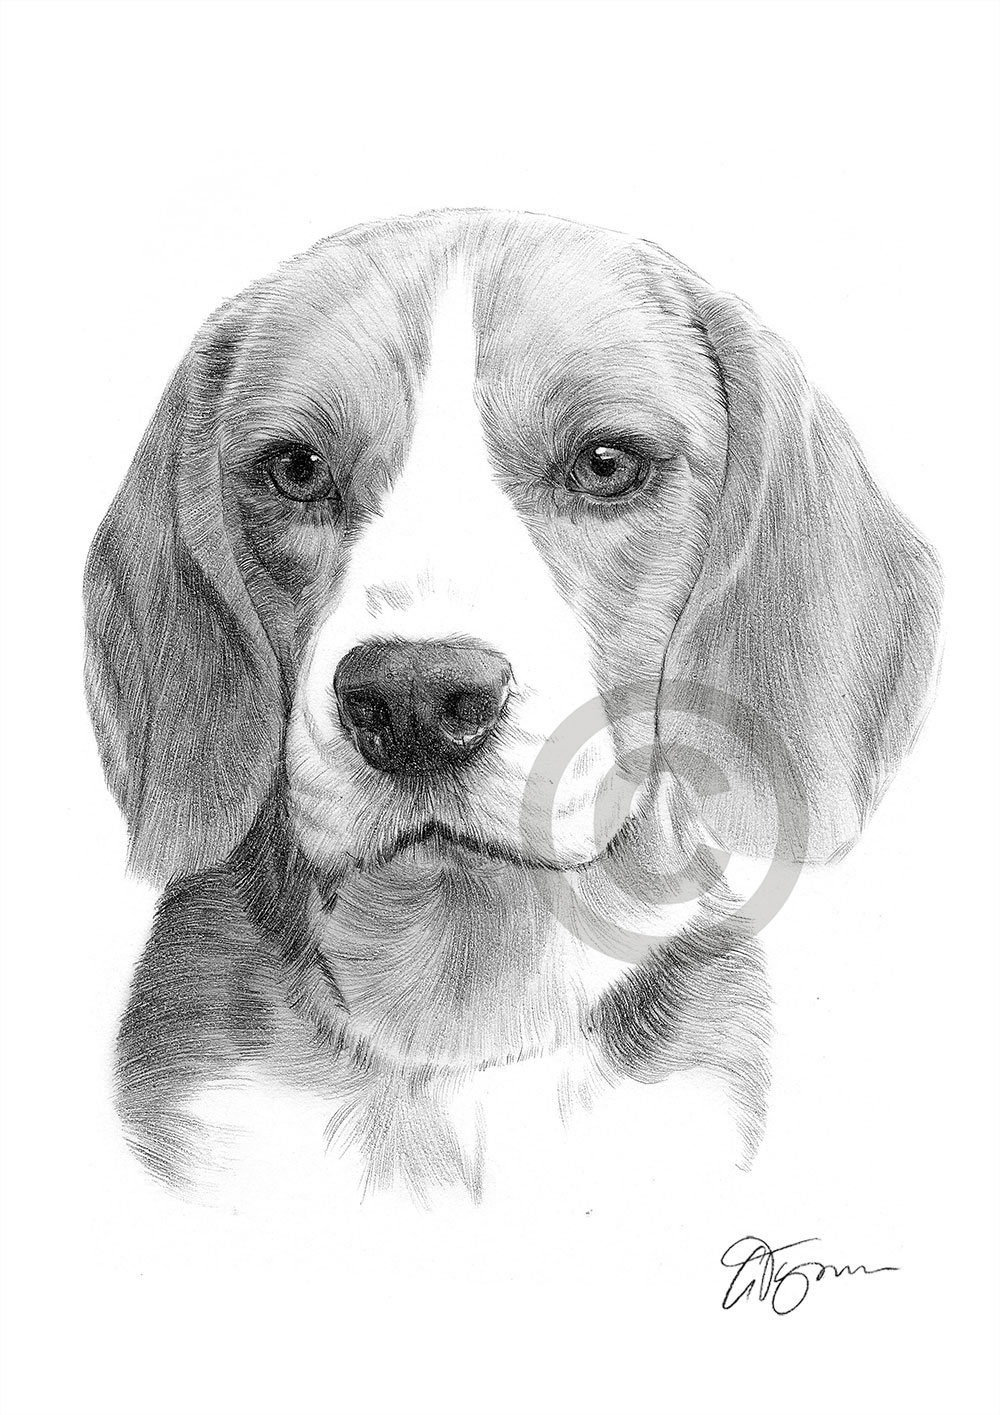 Pencil drawing of a Beagle